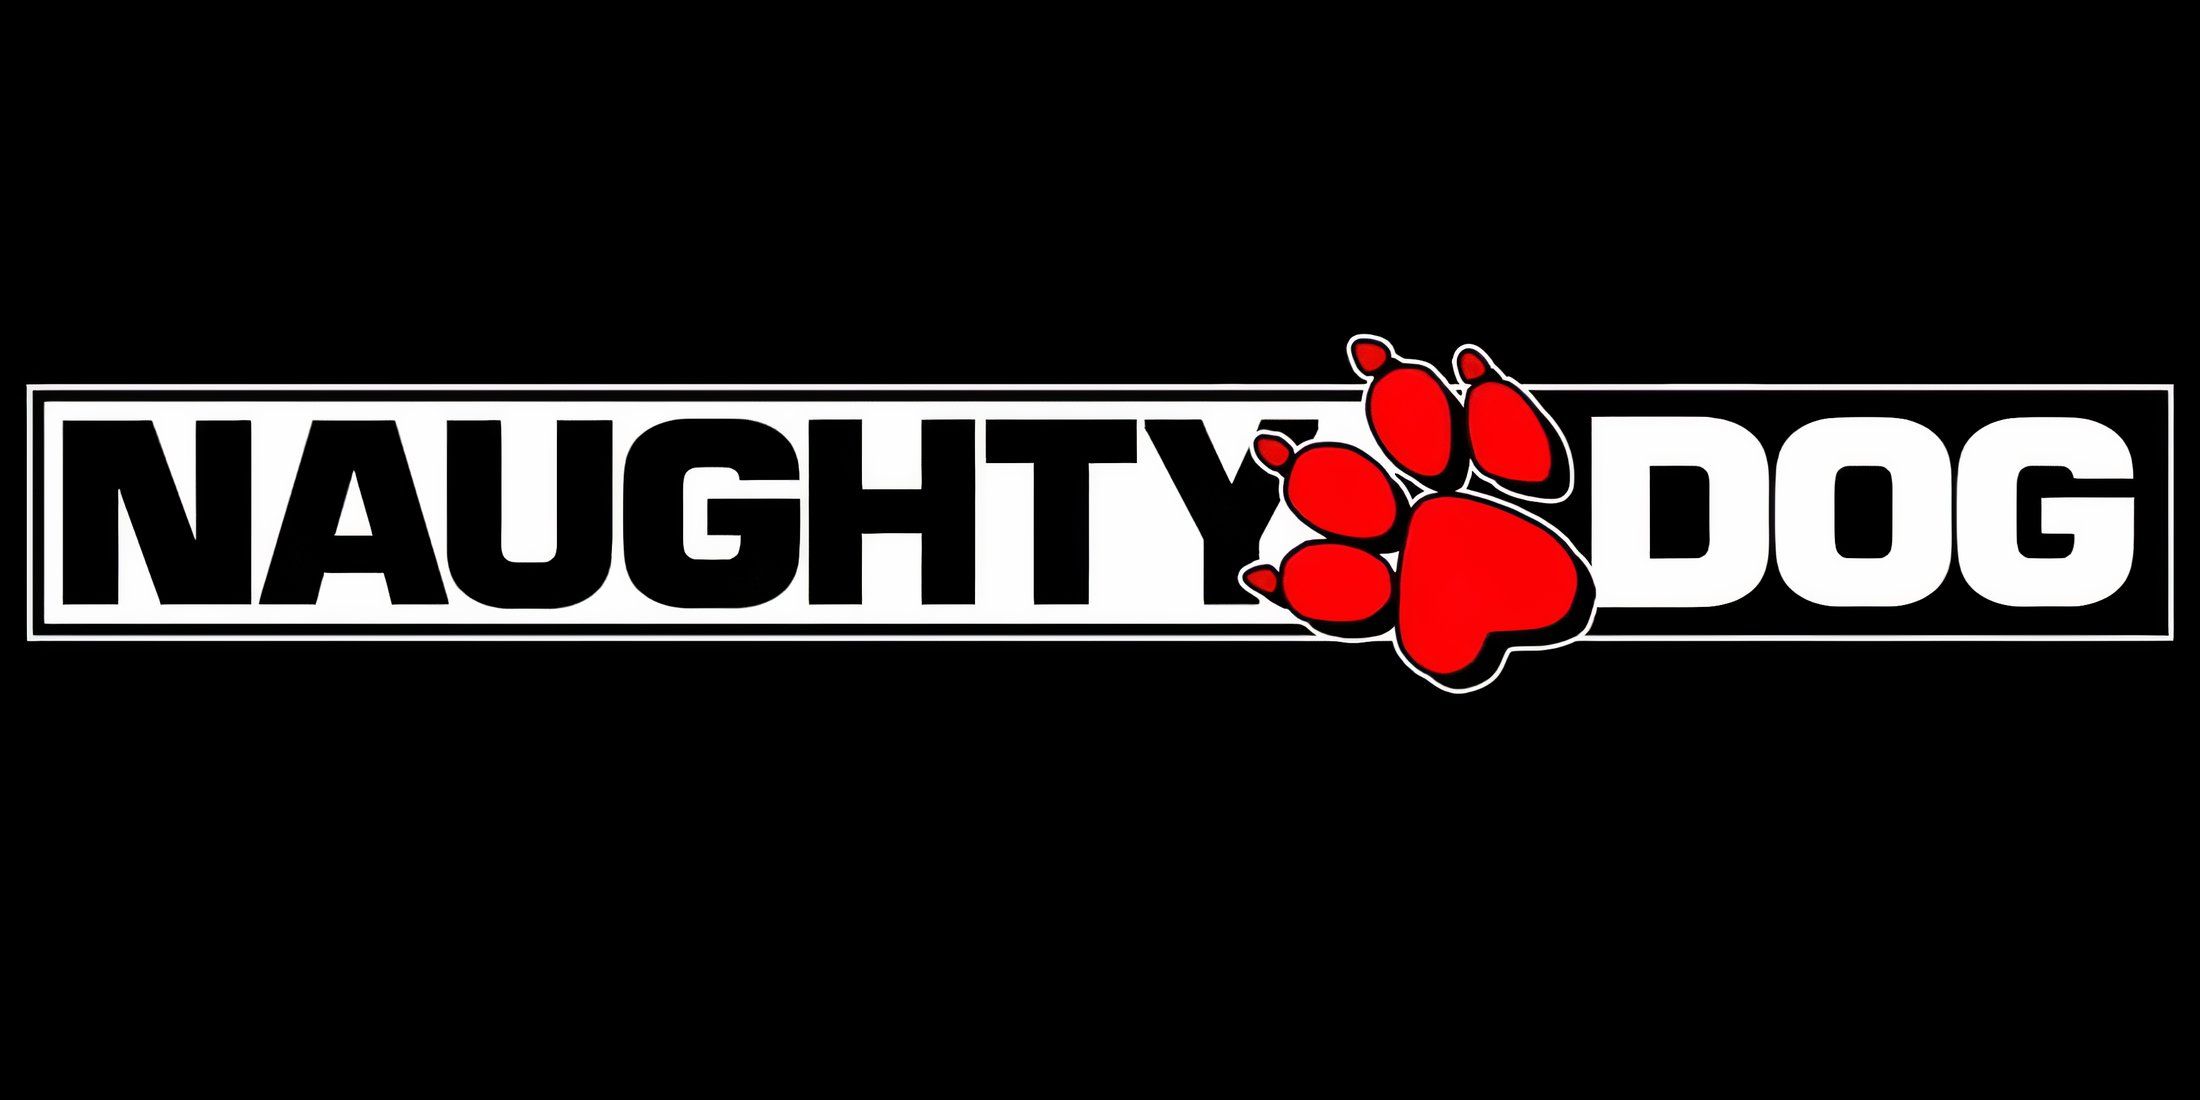 Naughty Dog logo